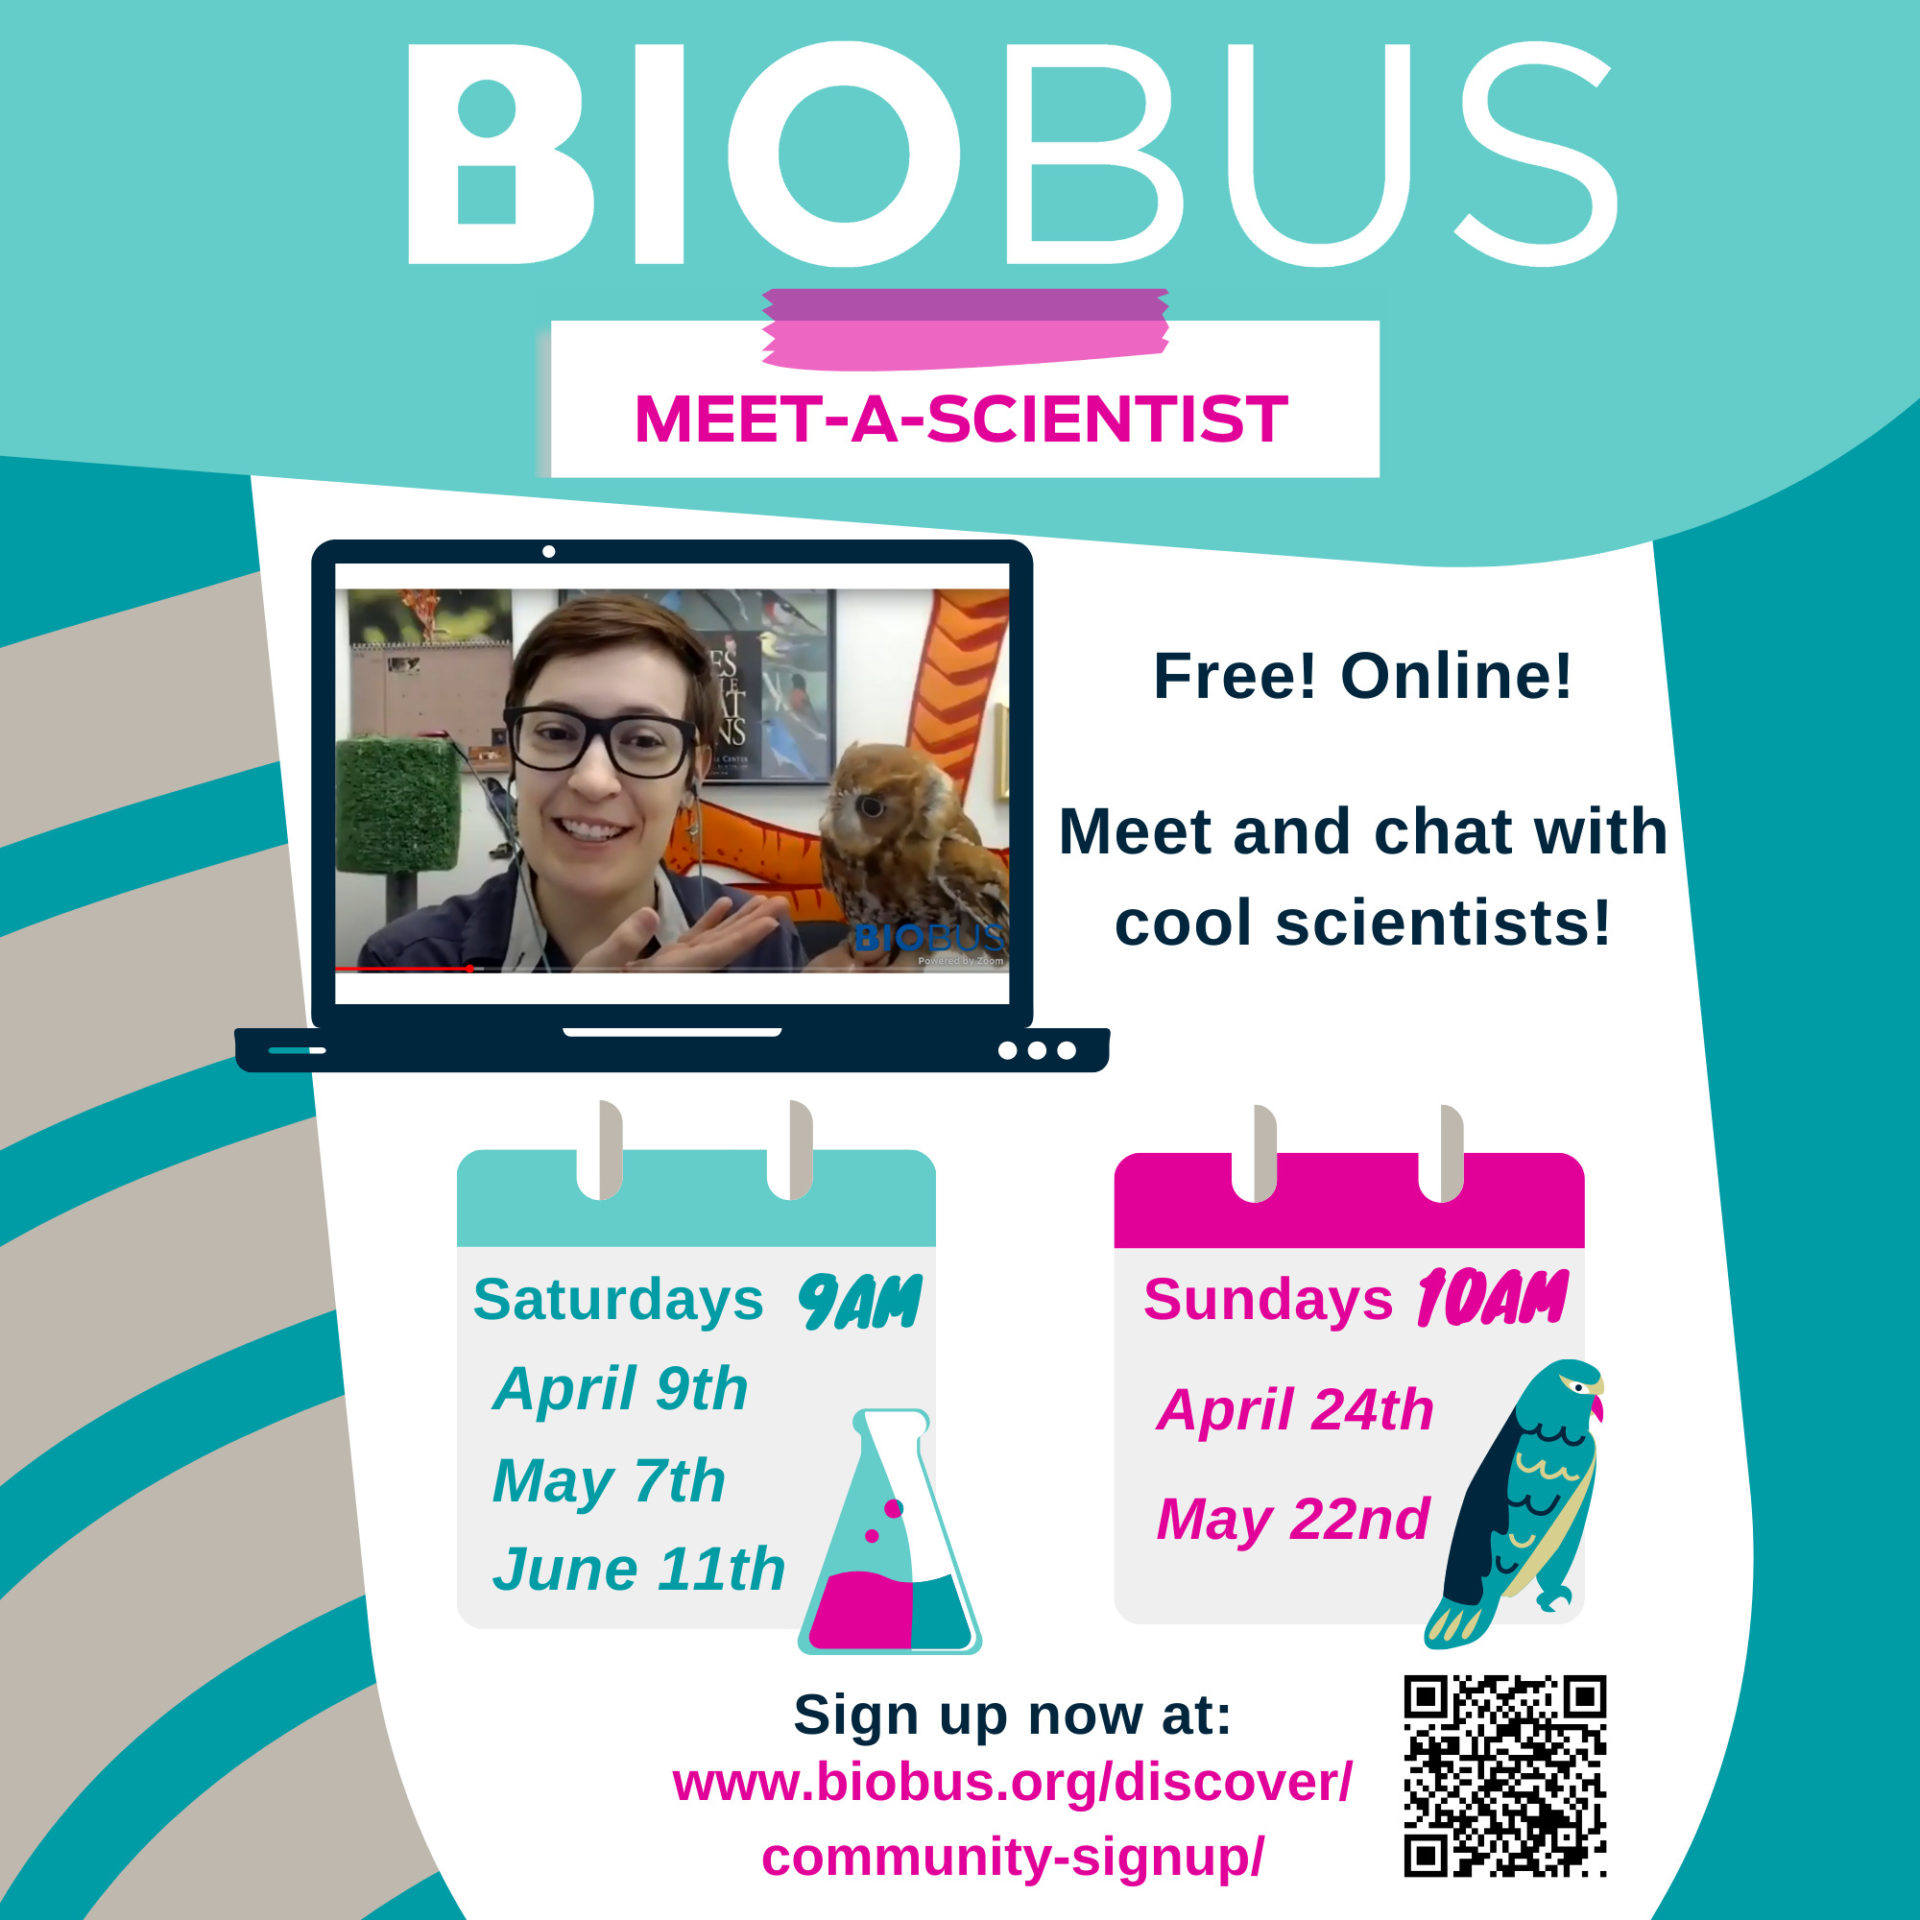 BioBus Meet-a-Scientist